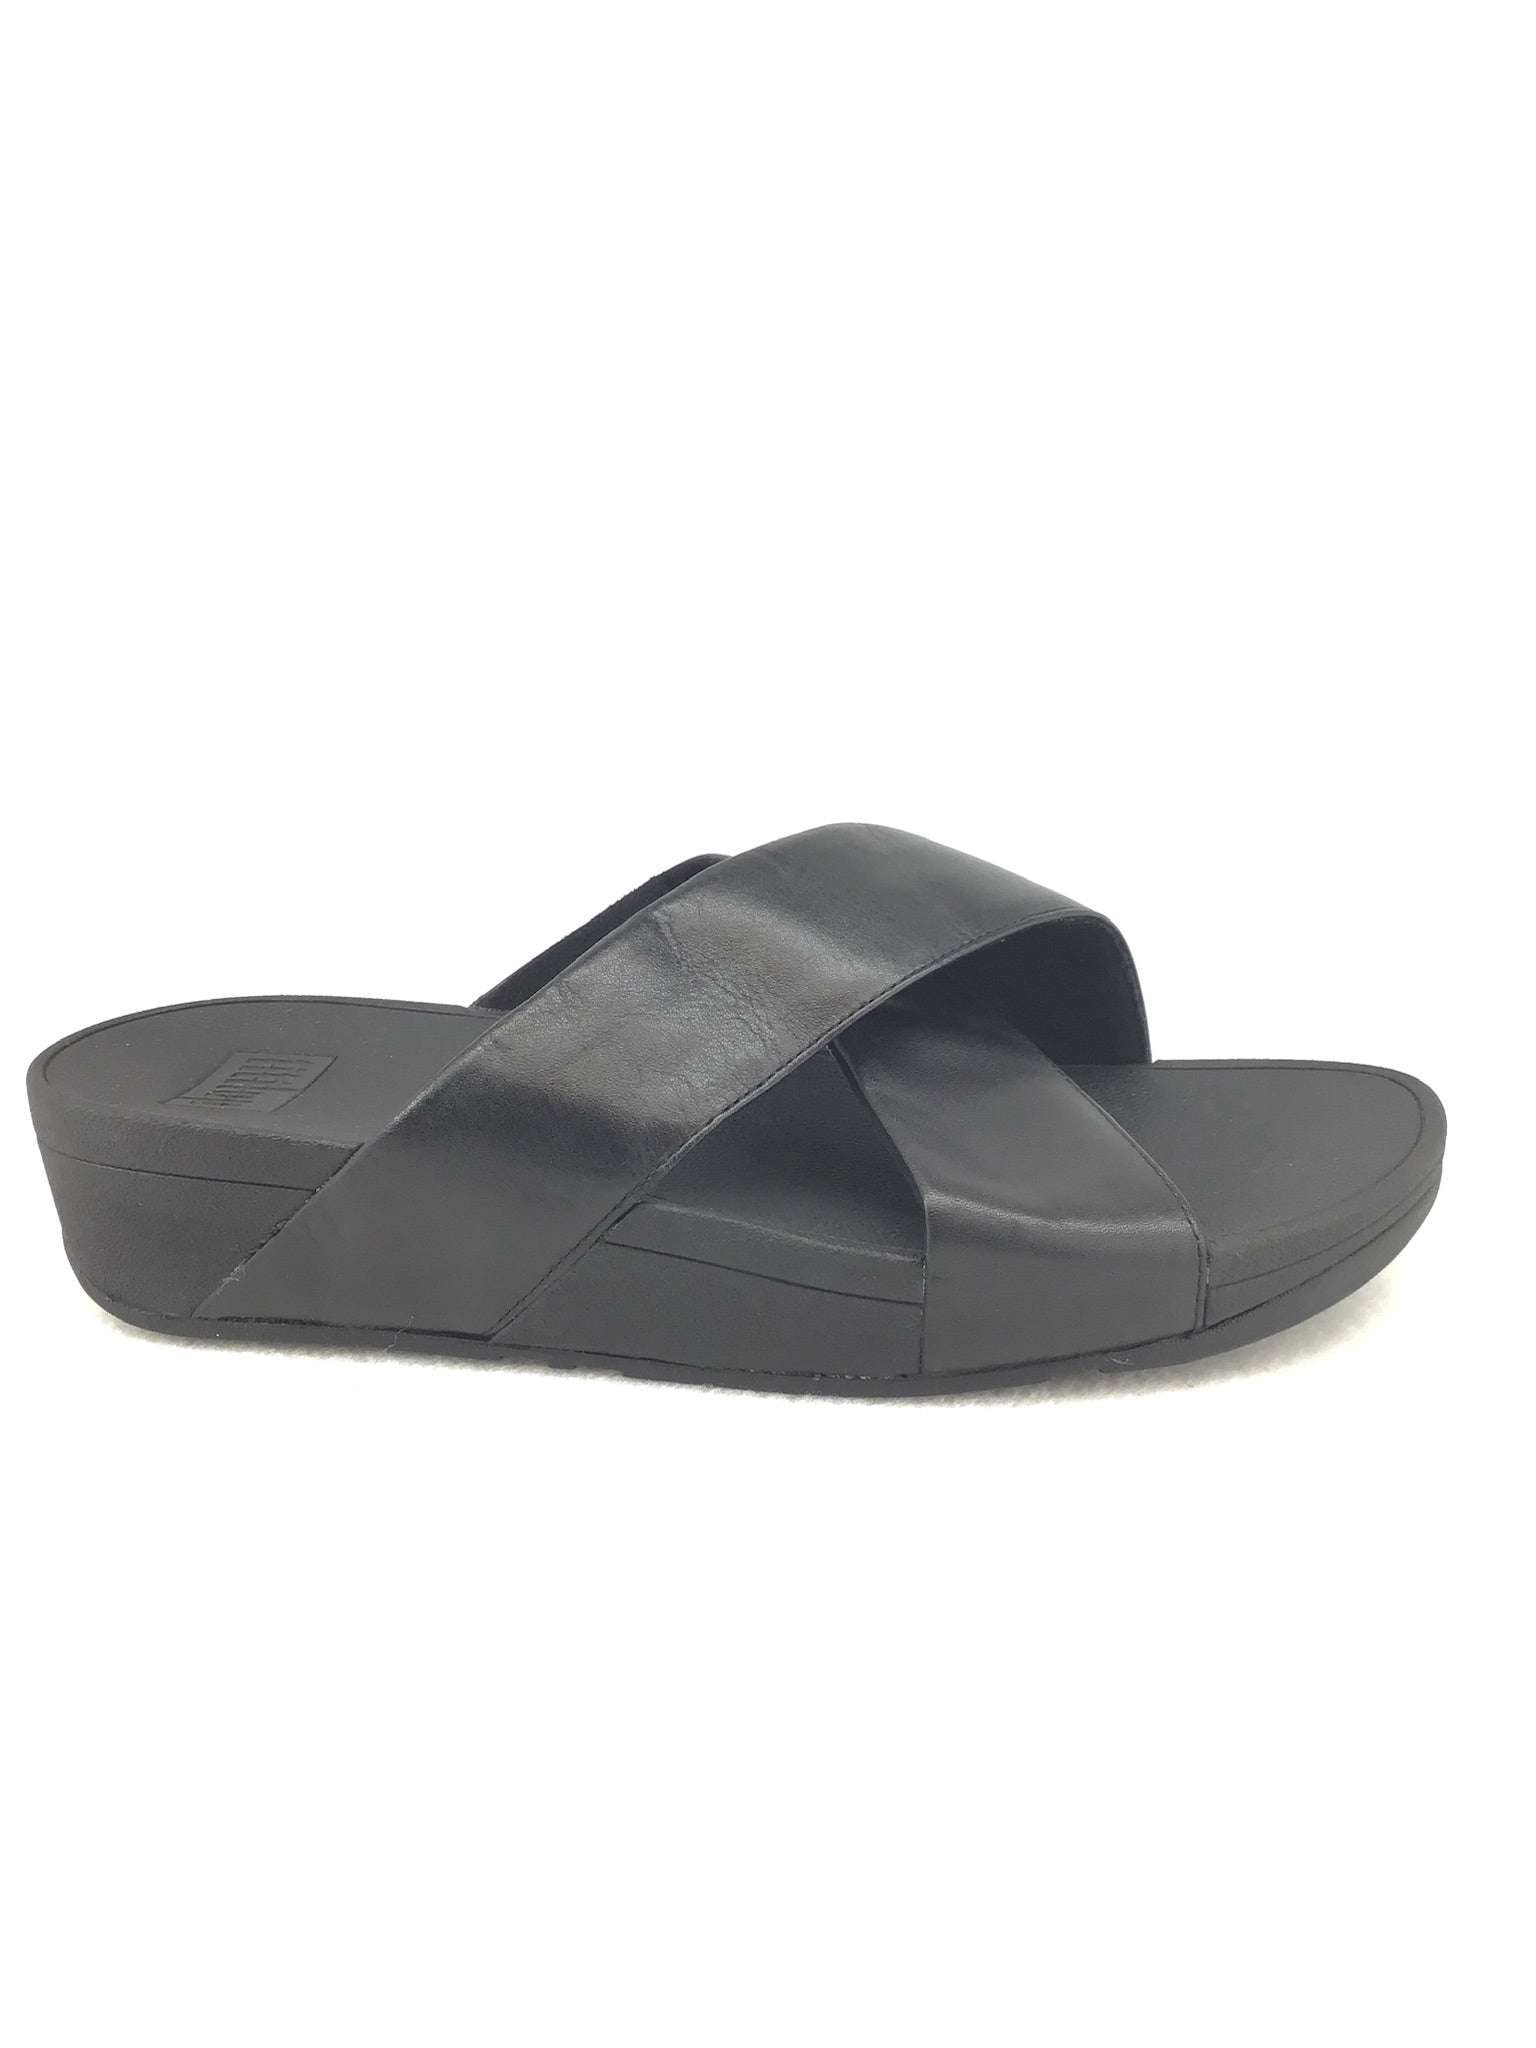 Fitflop Platform Sandals Size 10